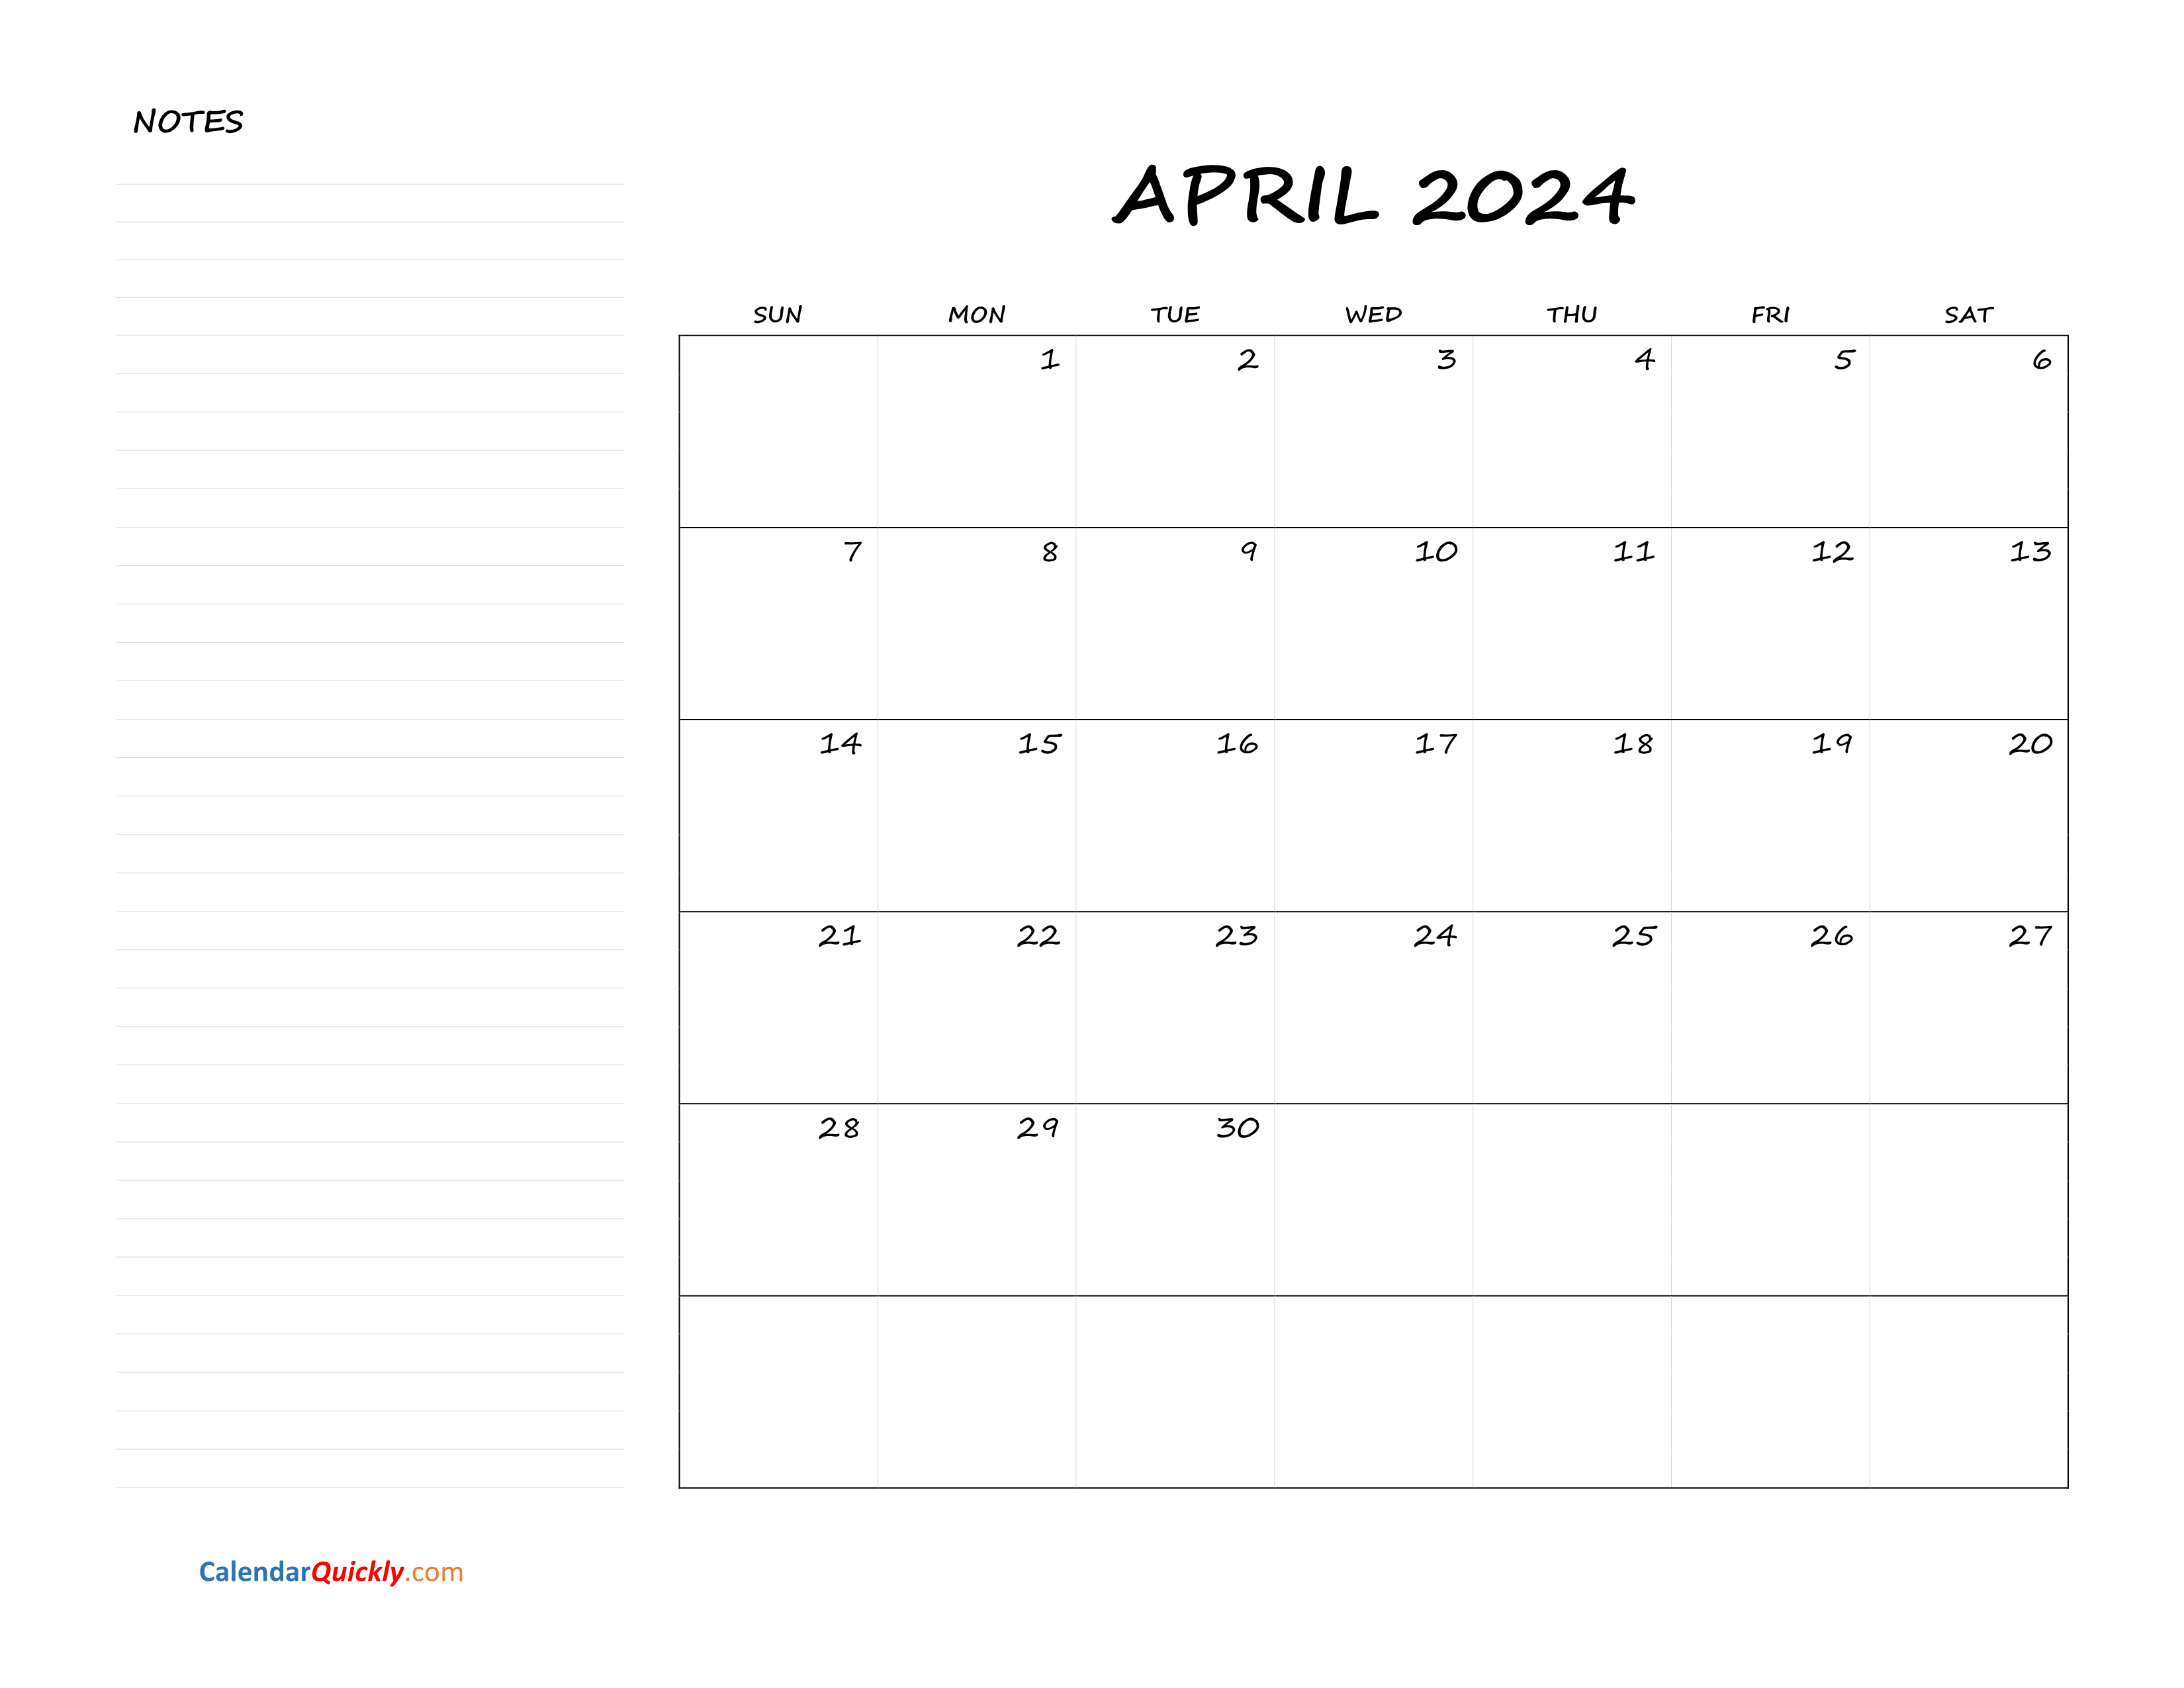 April Blank Calendar 2024 with Notes Calendar Quickly